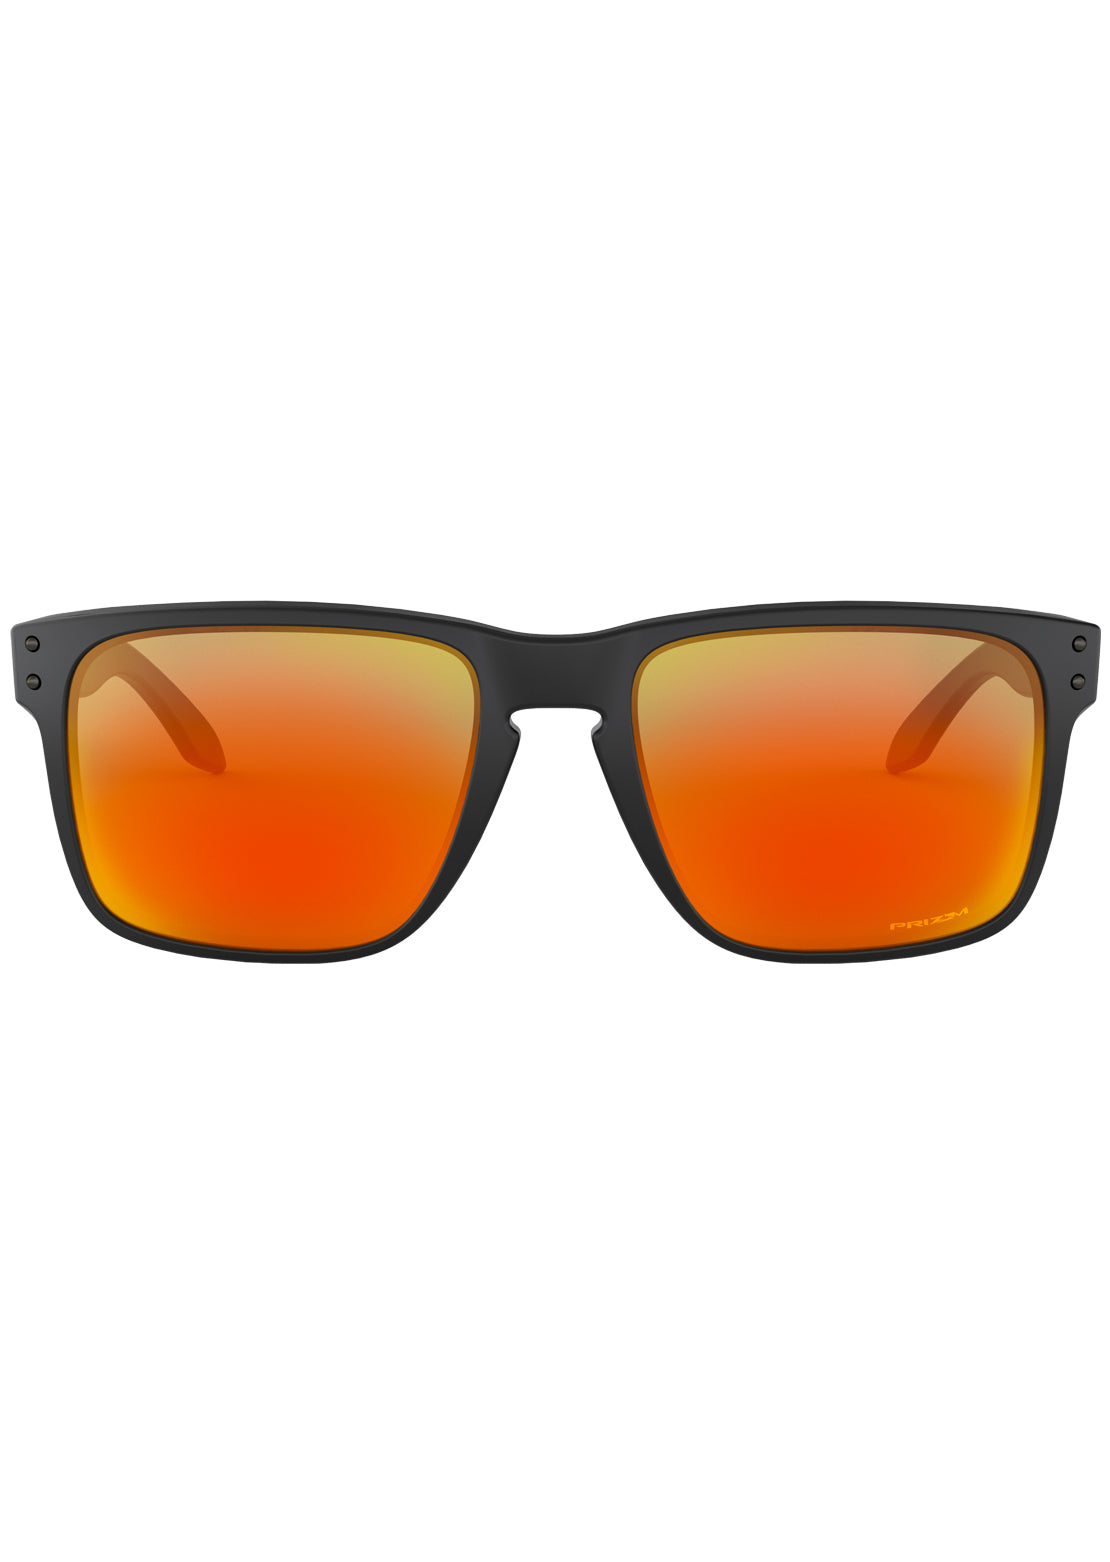 Oakley Men’s Holbrook XL Sunglasses Matte Black/Prizm Ruby Iridium